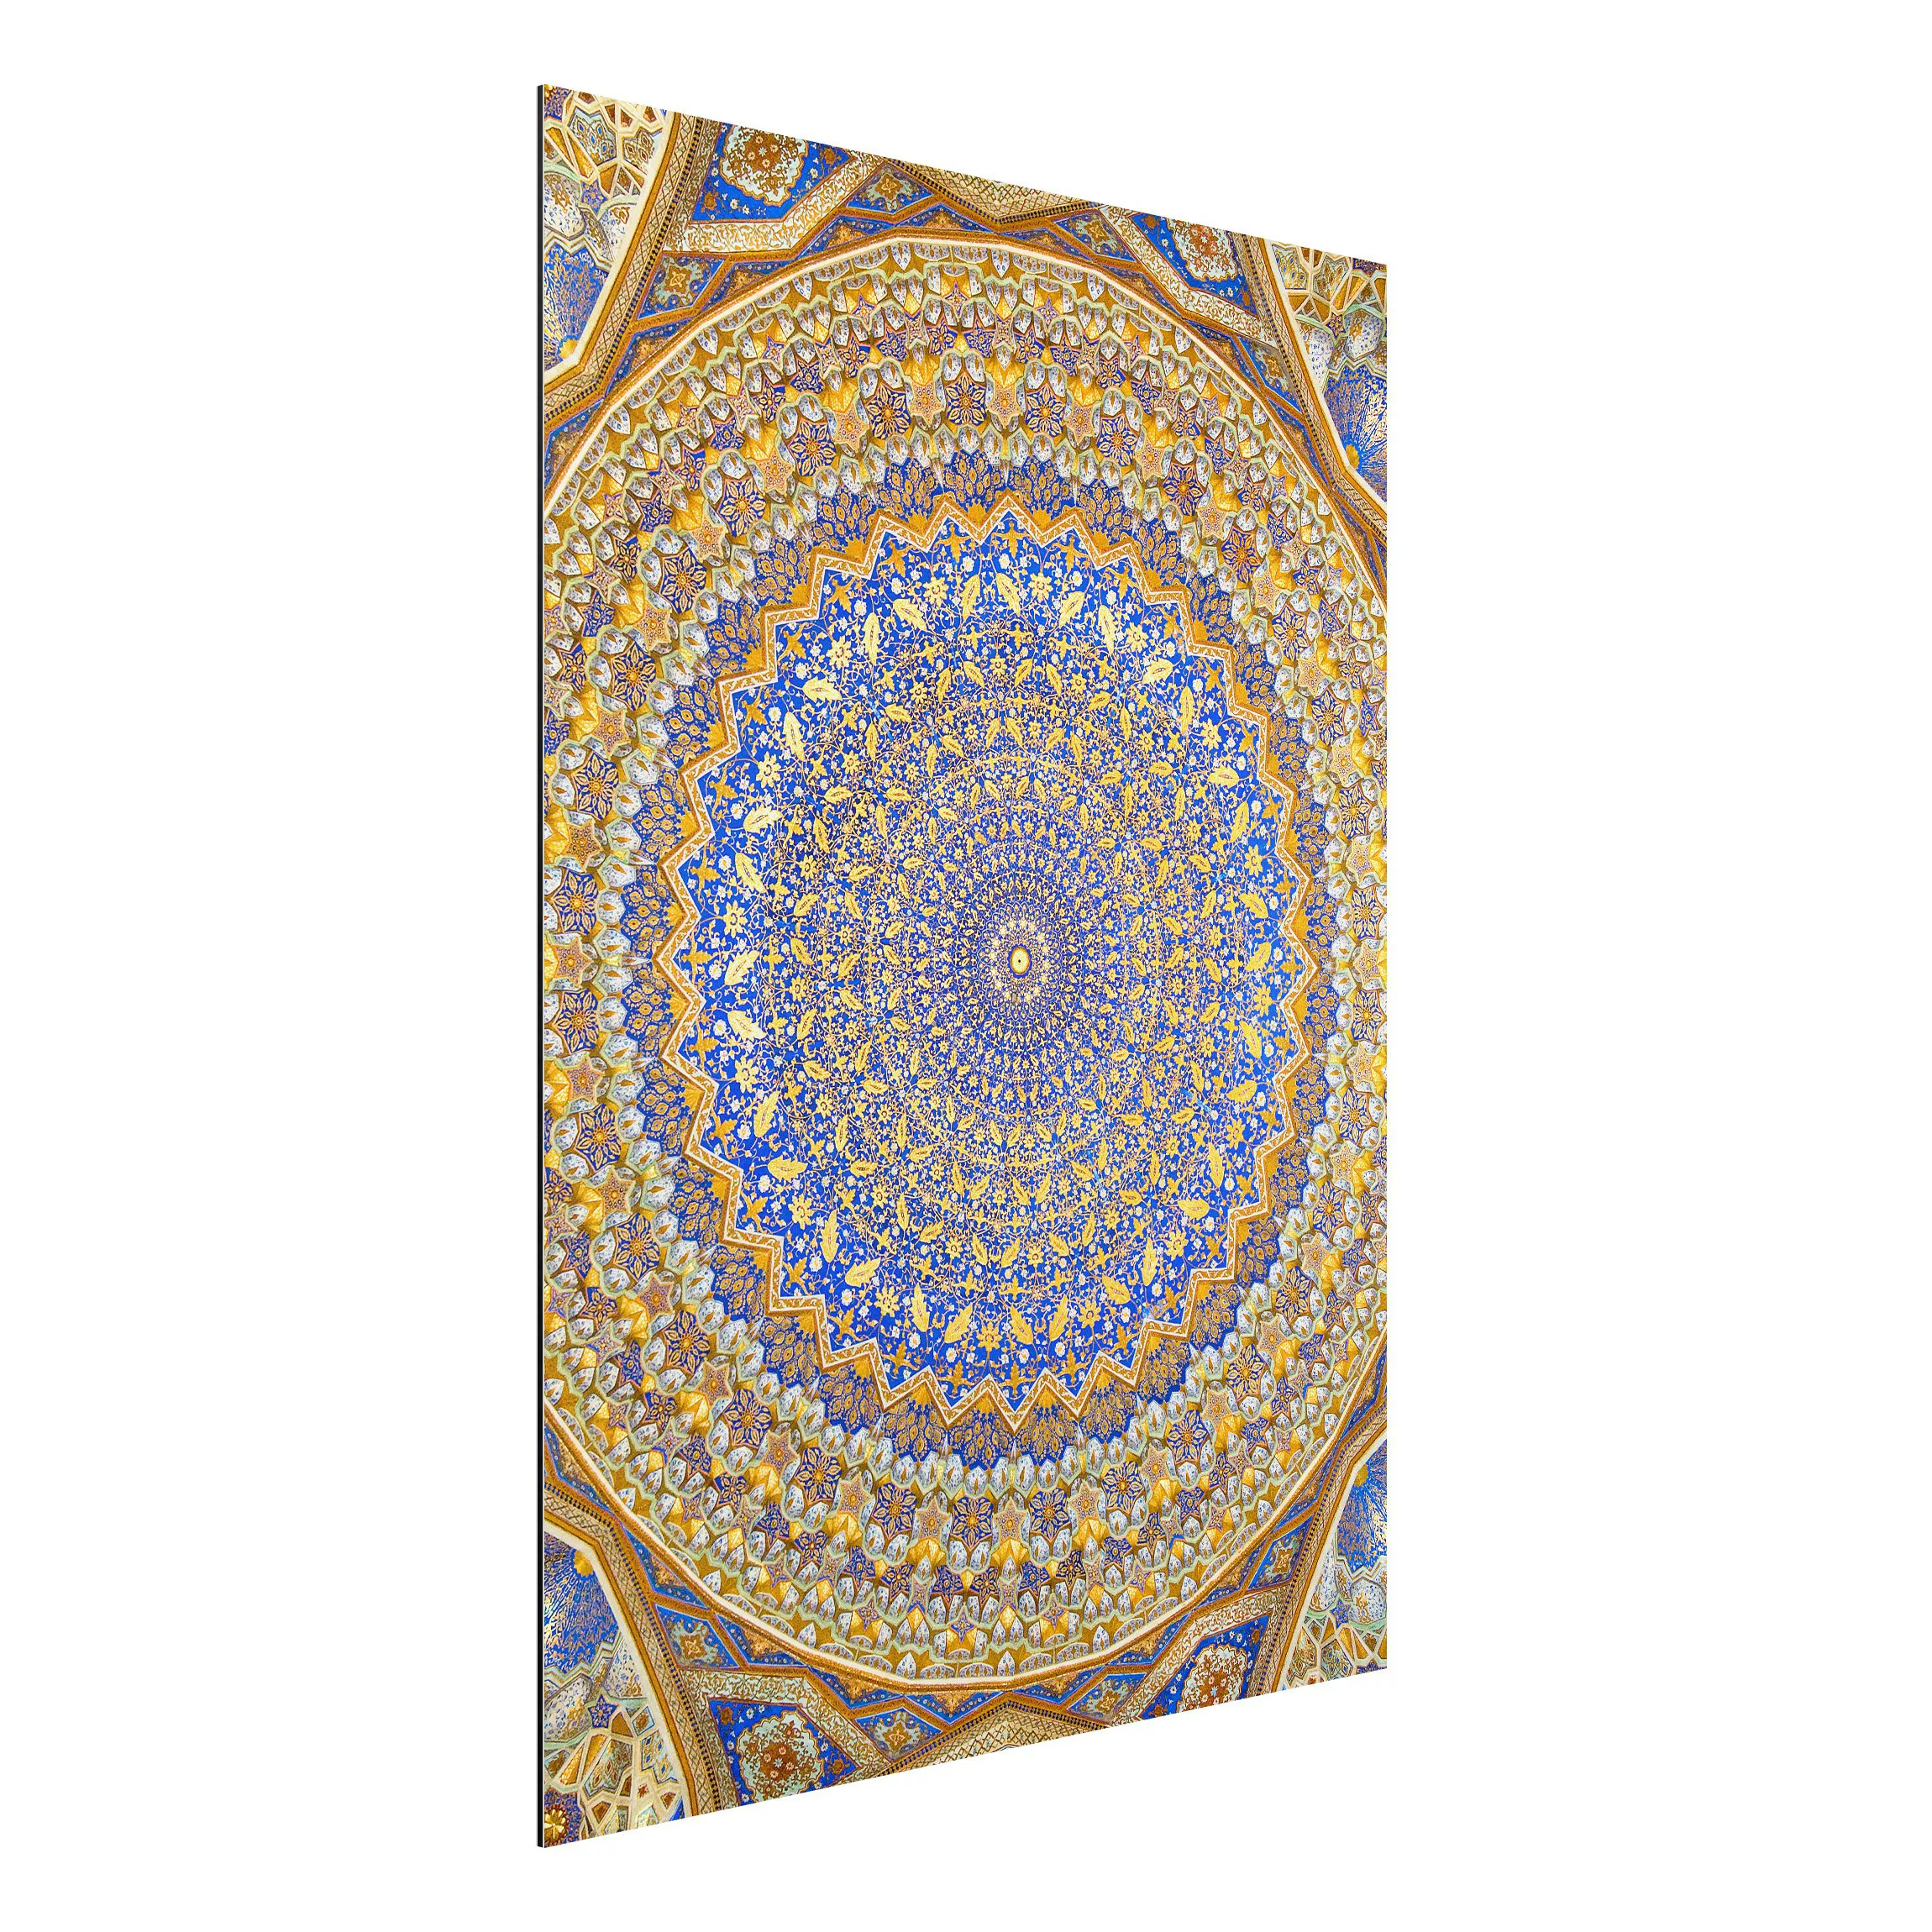 Alu-Dibond Bild Muster - Hochformat 3:4 Dome of the Mosque günstig online kaufen